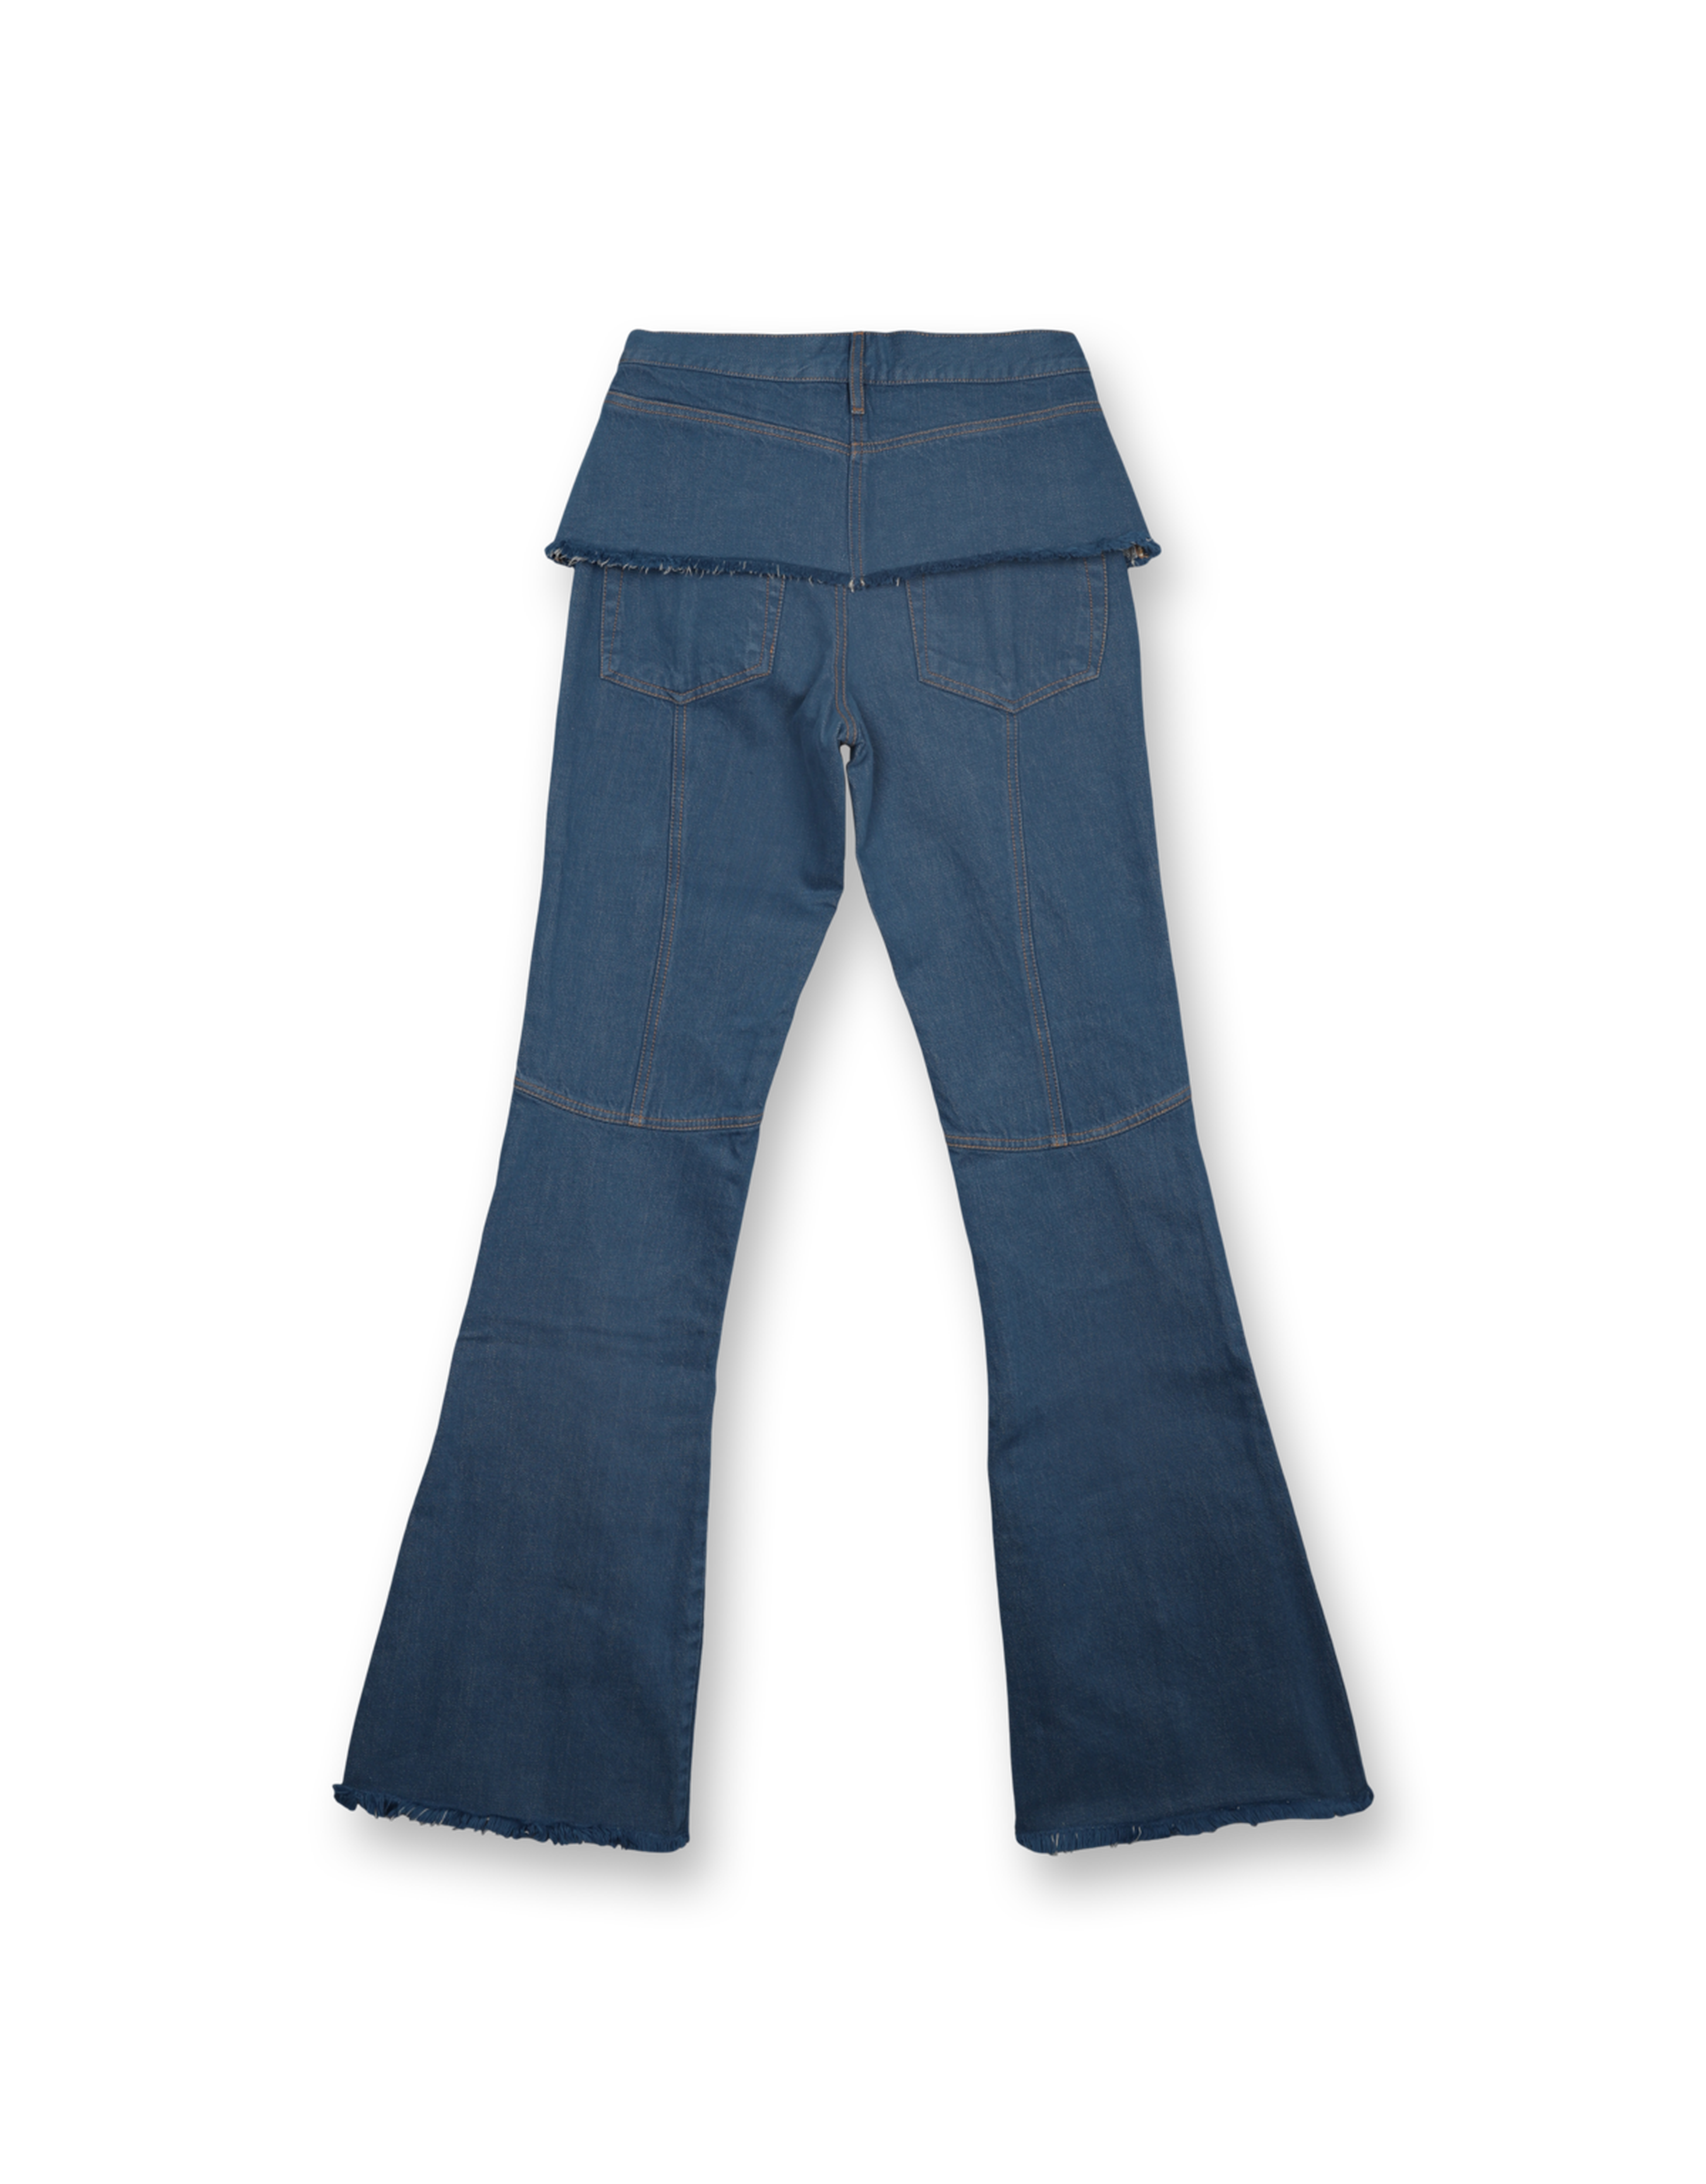 Snell Indigo Jeans